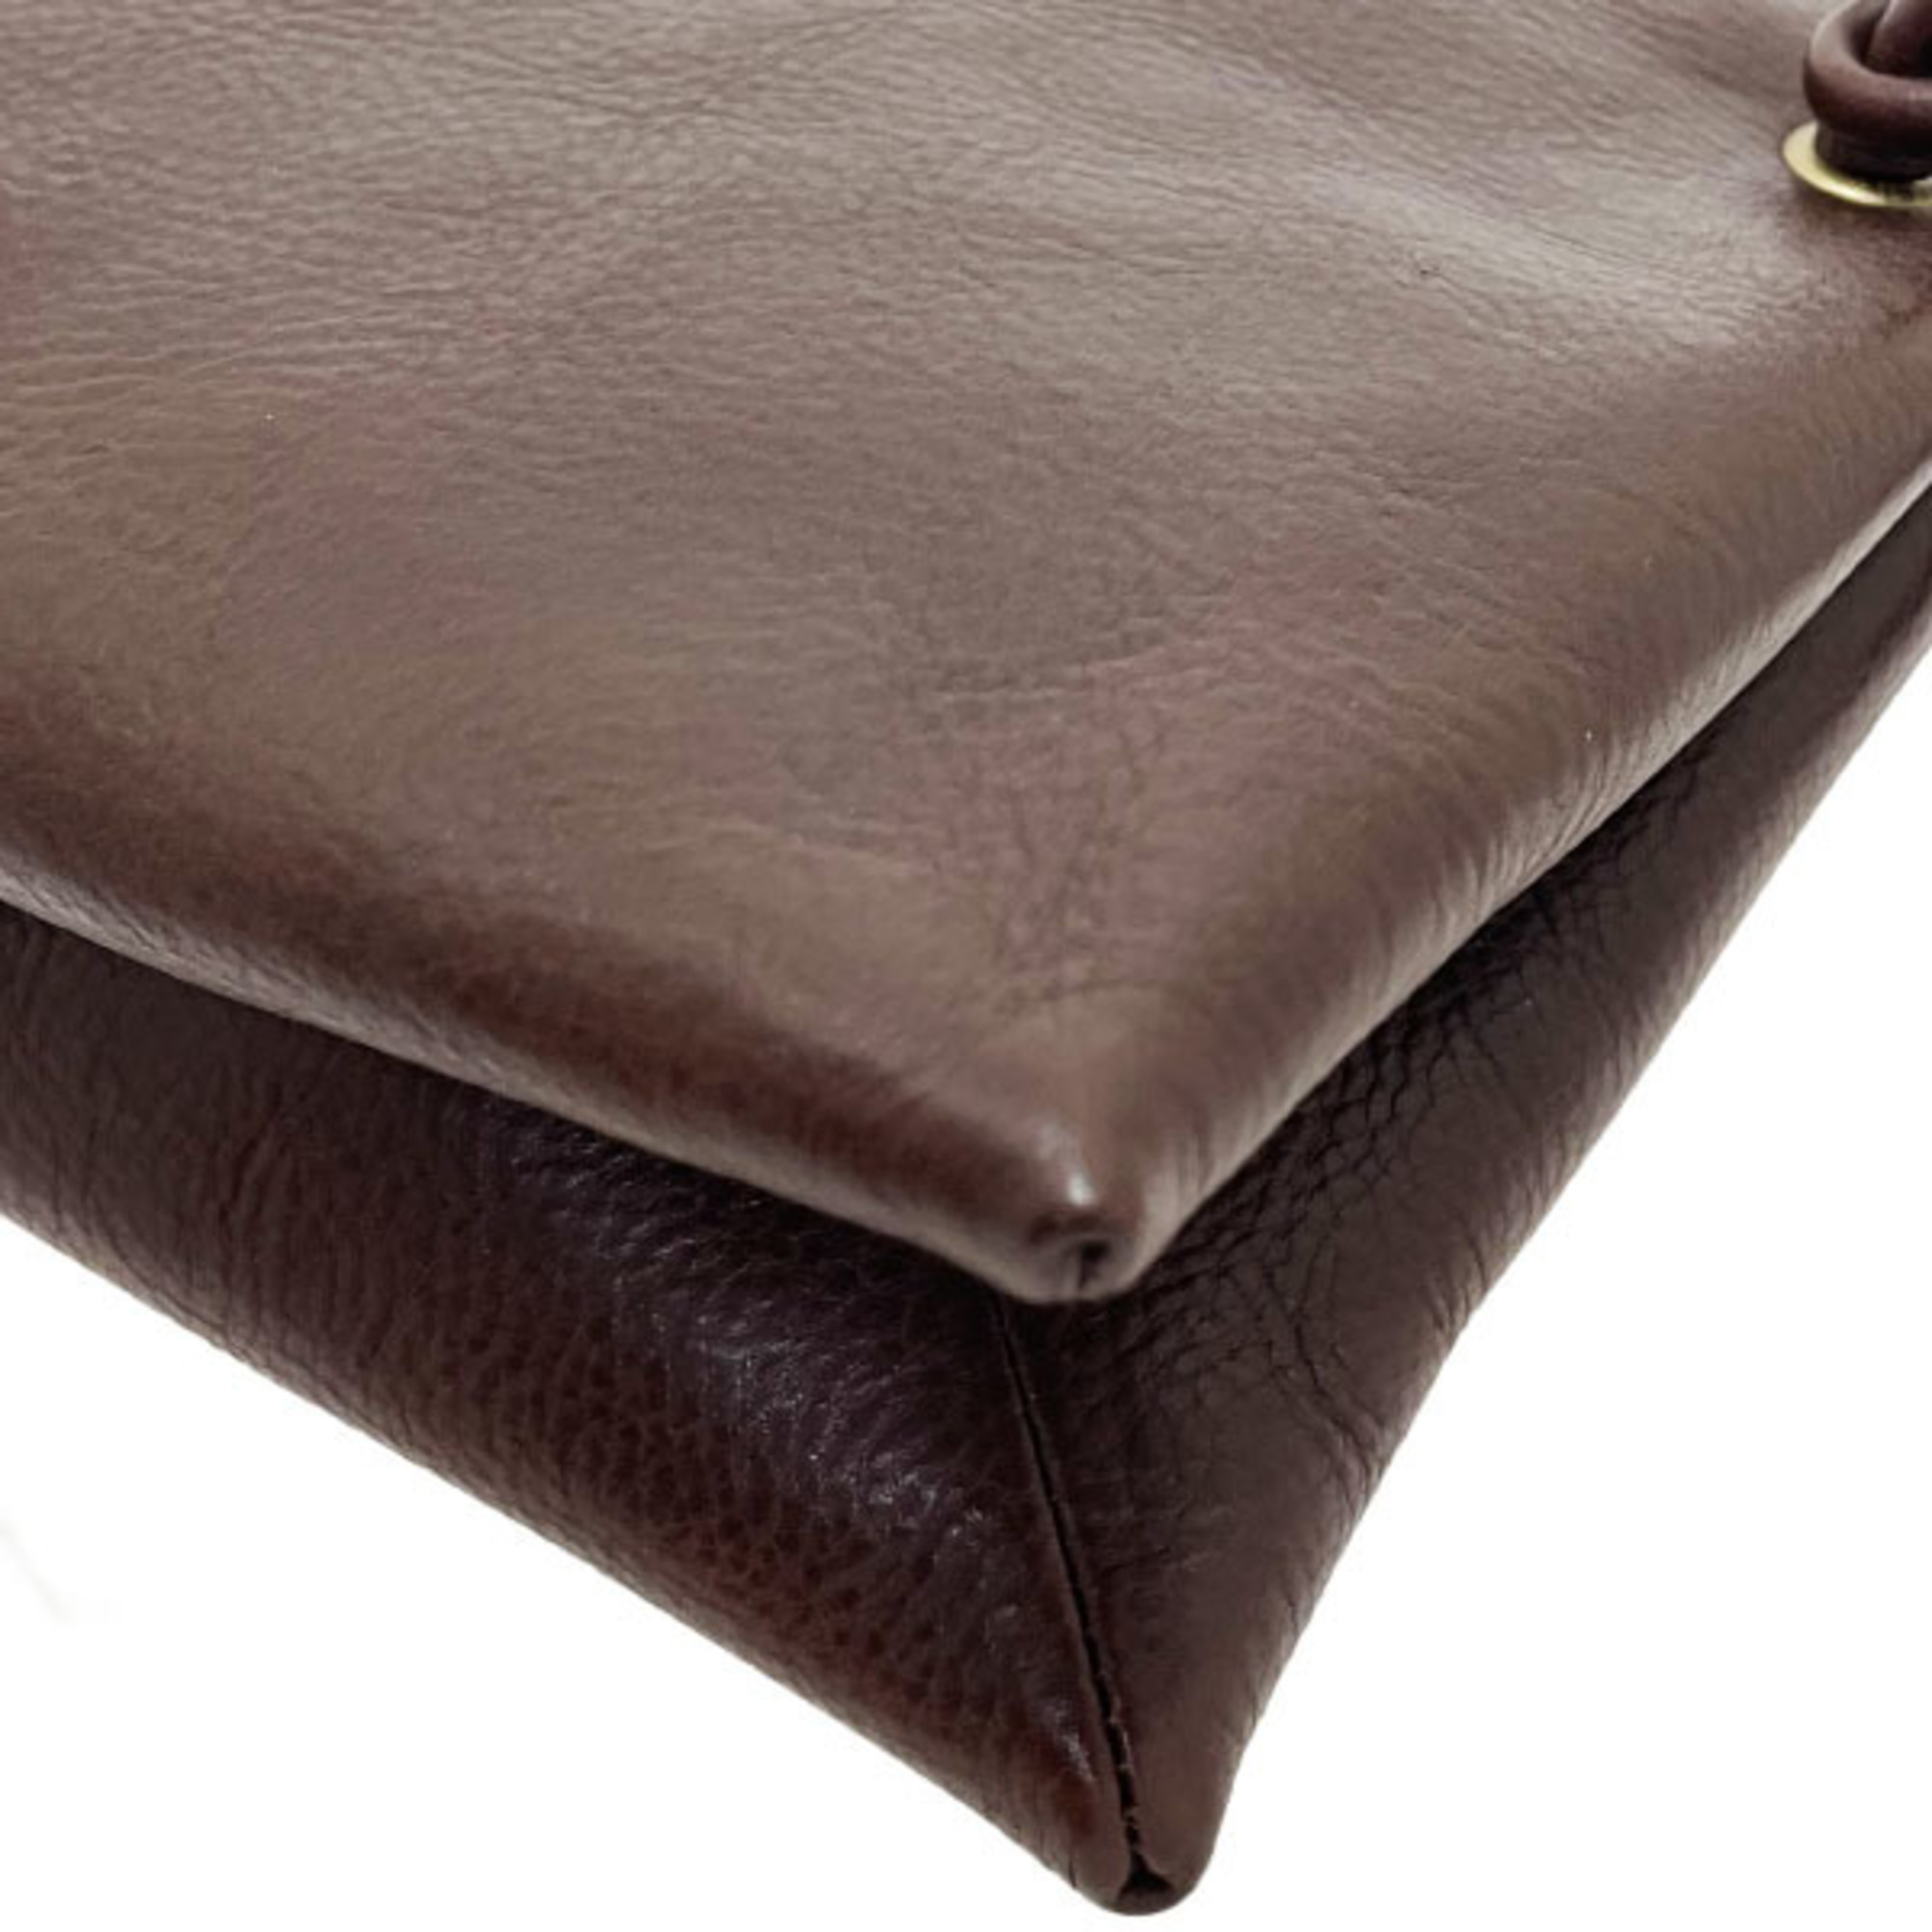 IL BISONTE Shoulder Bag Leather Square Pochette Dark Brown TR-13131